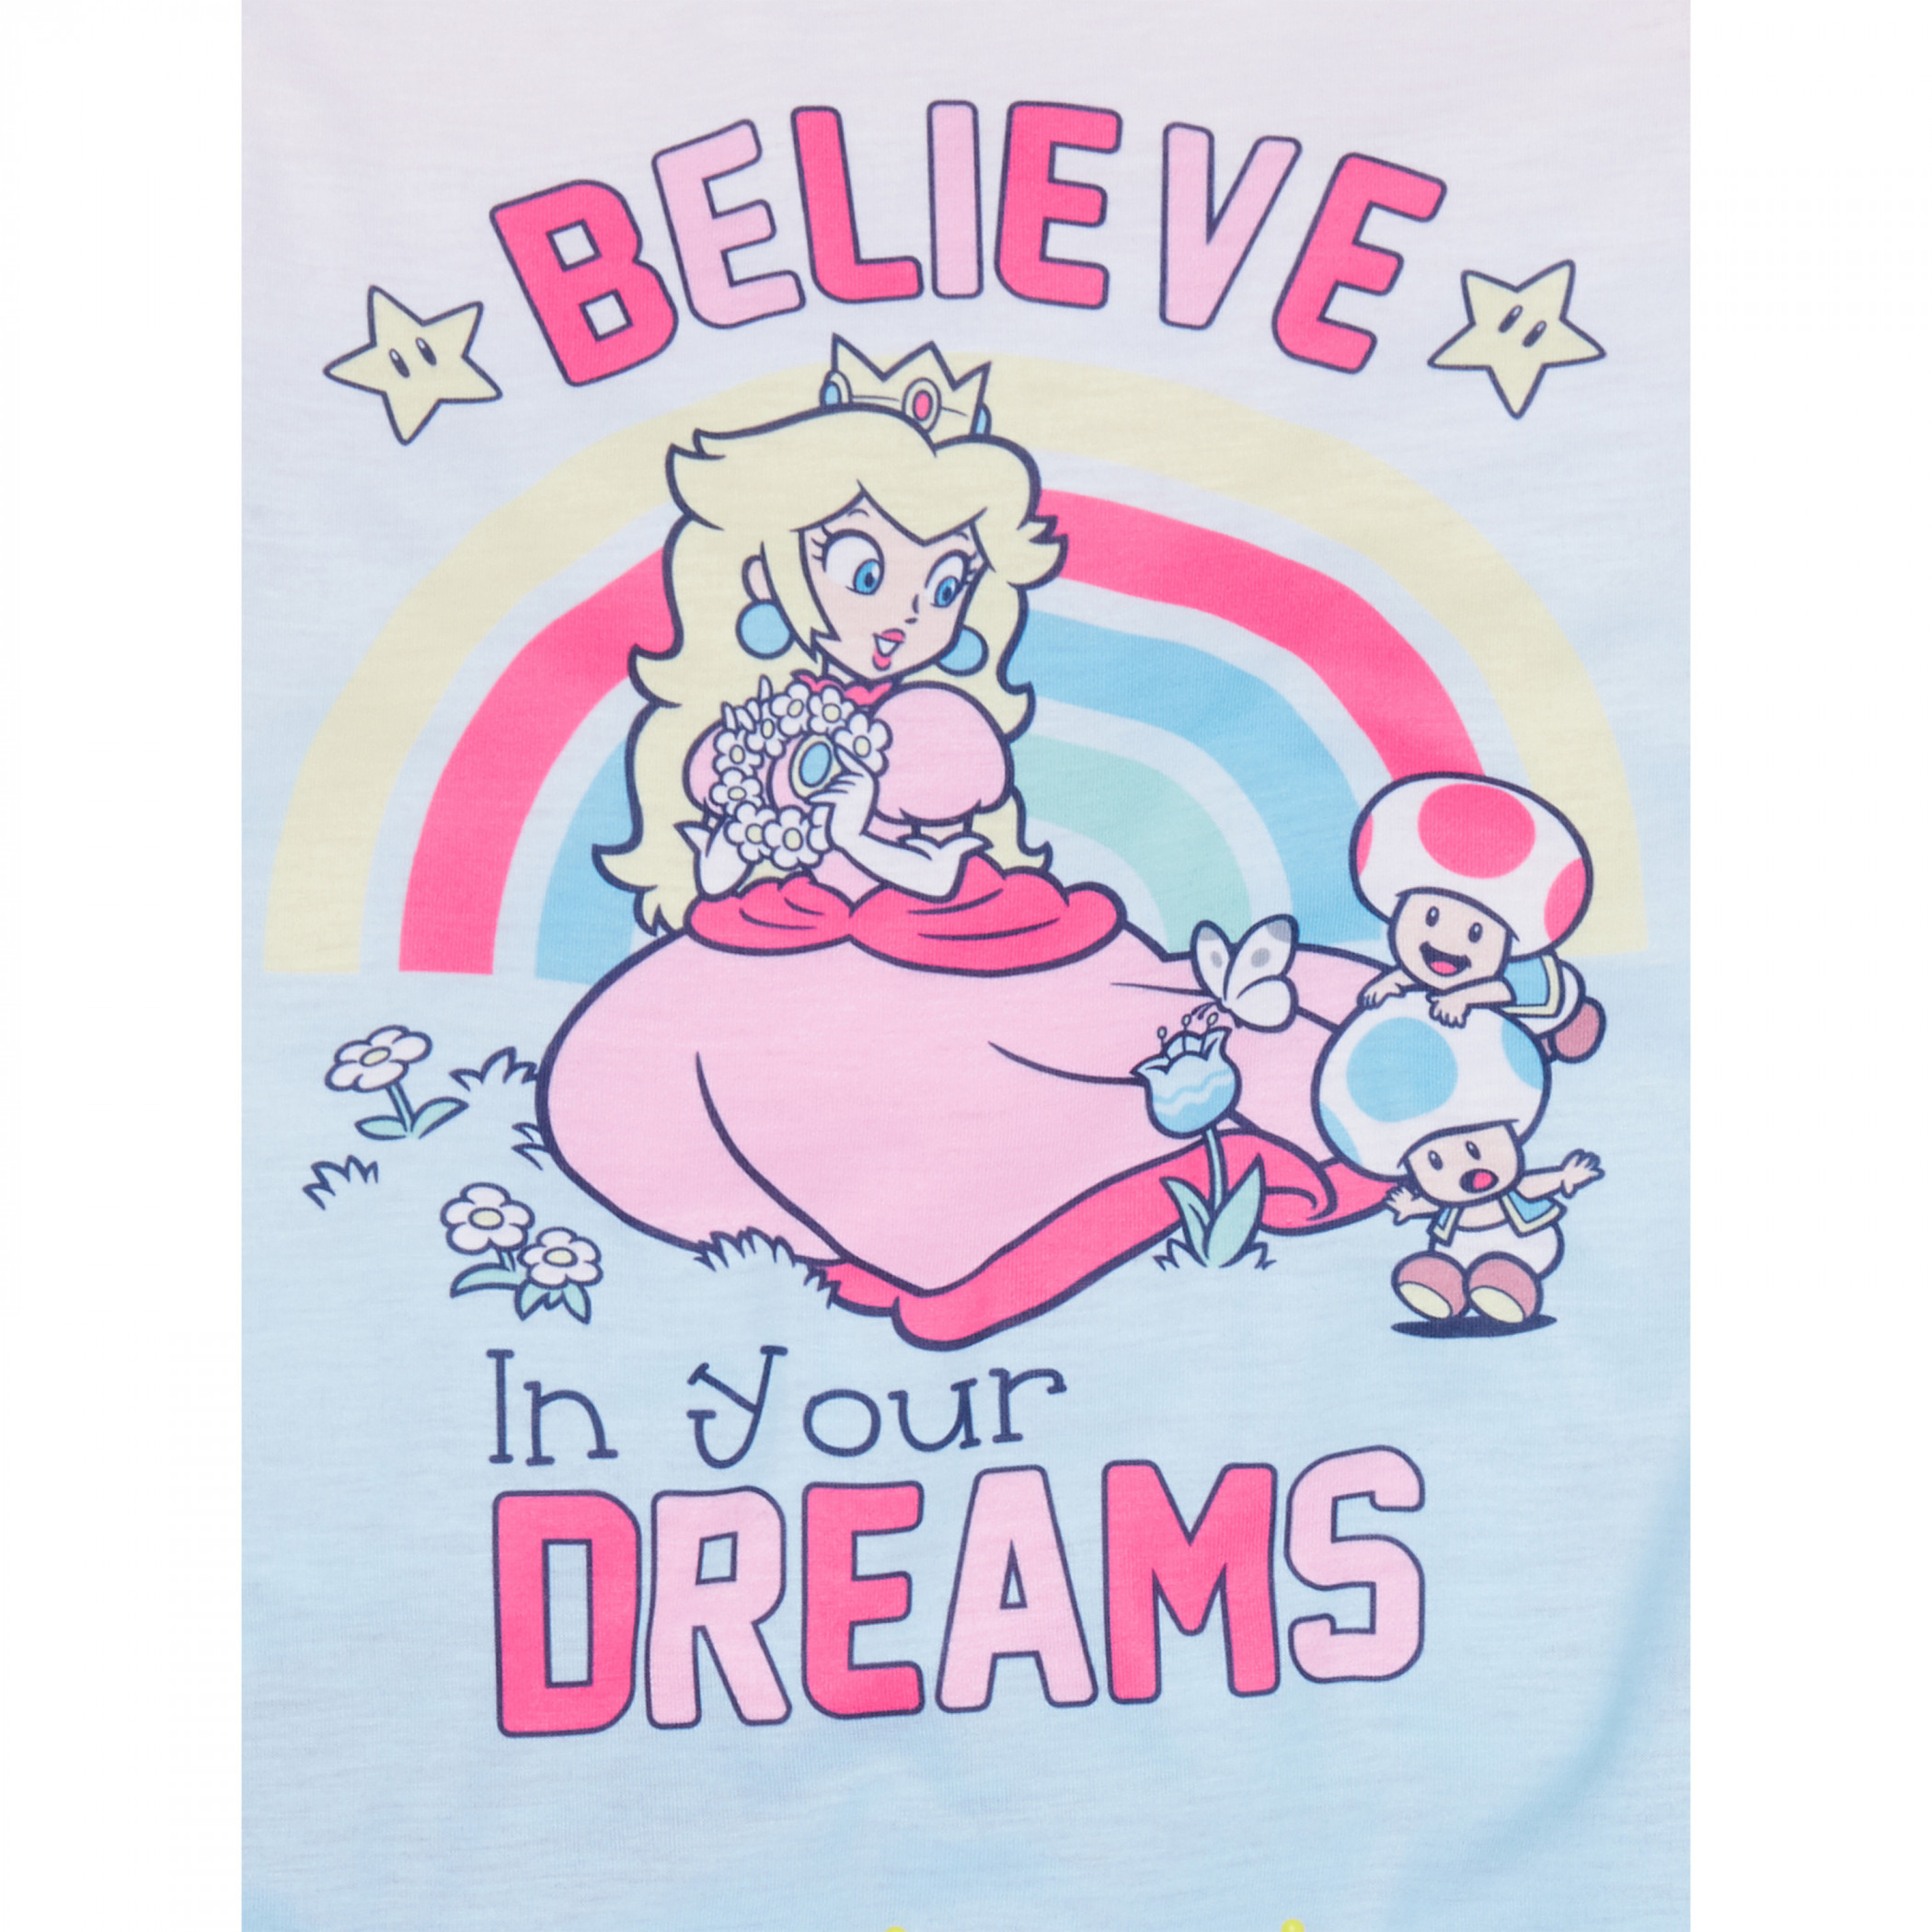 Super Mario Princess Peach Believe in Your Dreams Girl's Pajama Set